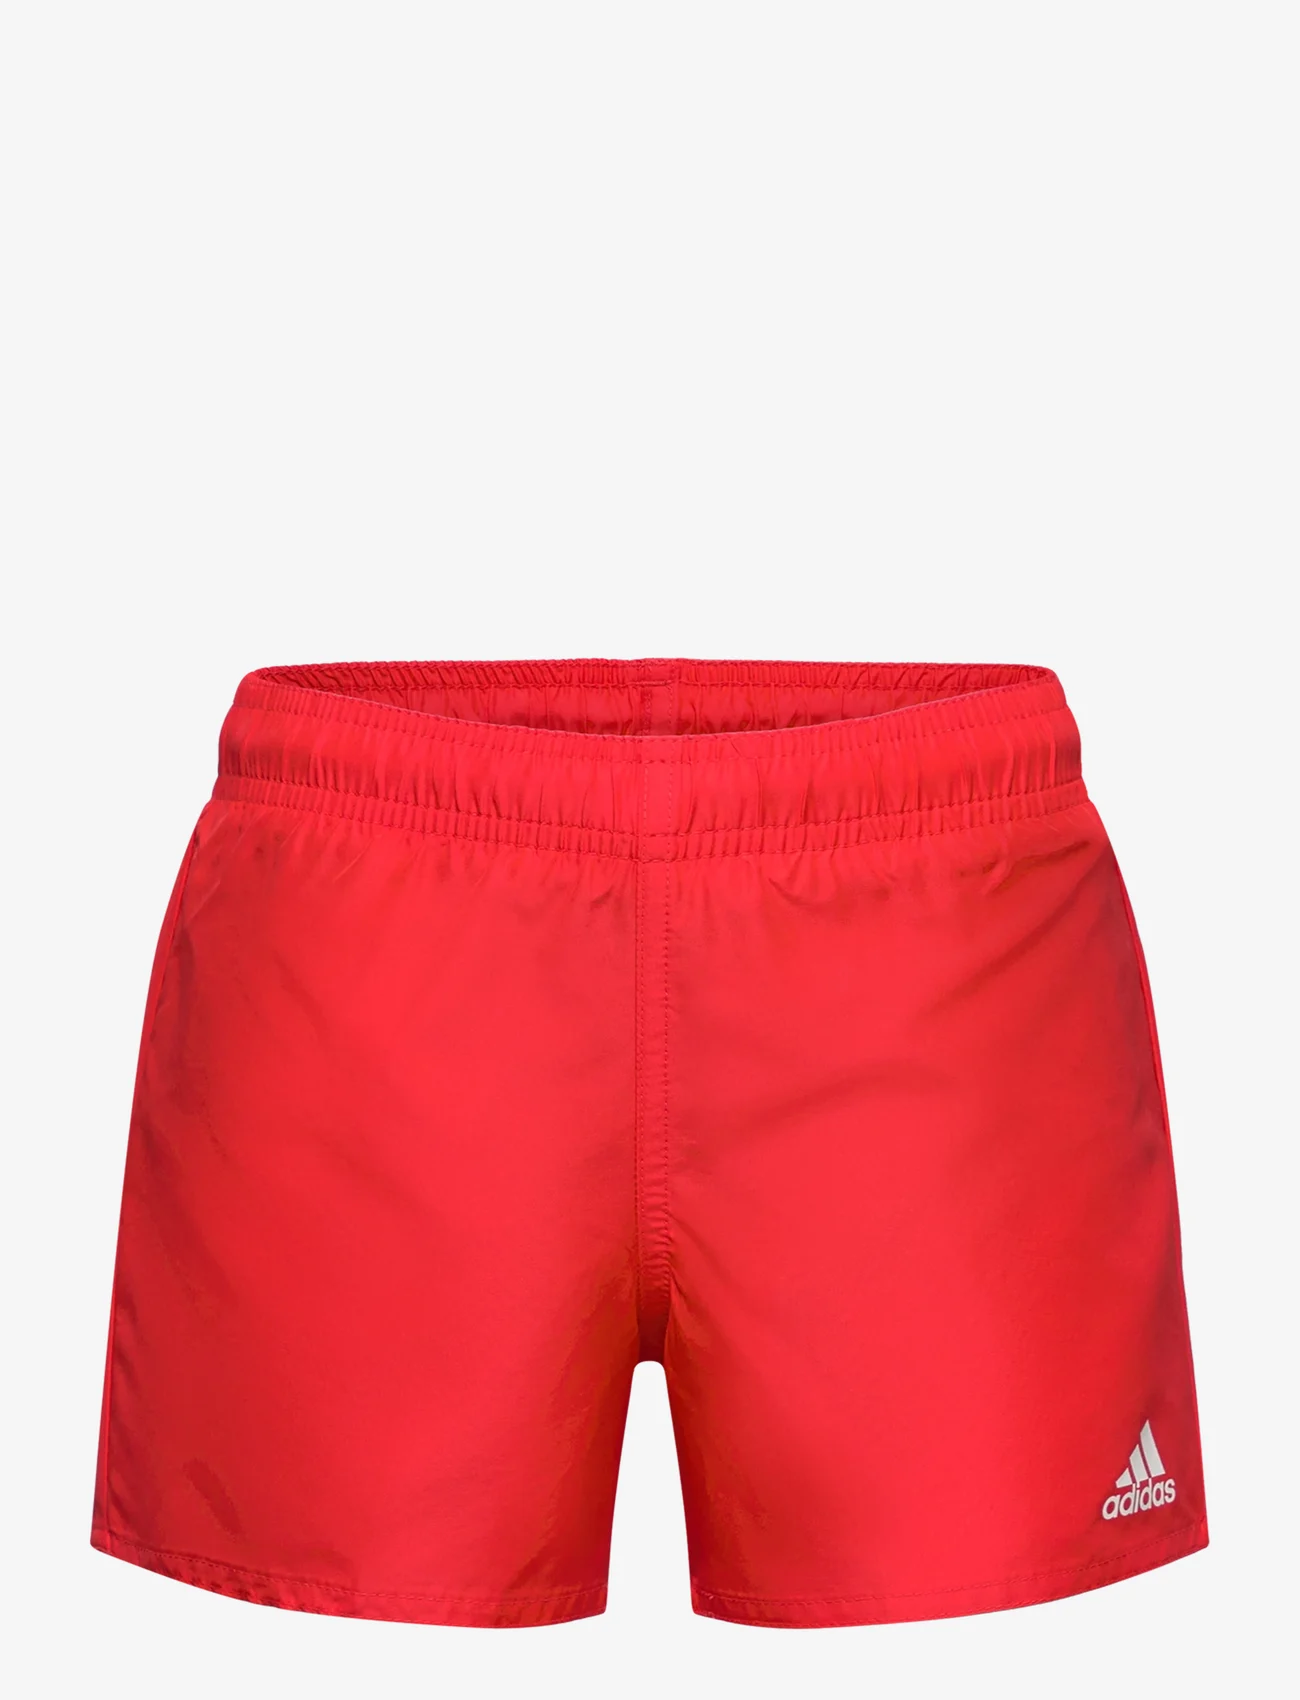 adidas Performance - YB BOS SHORTS - swim shorts - brired/white - 0